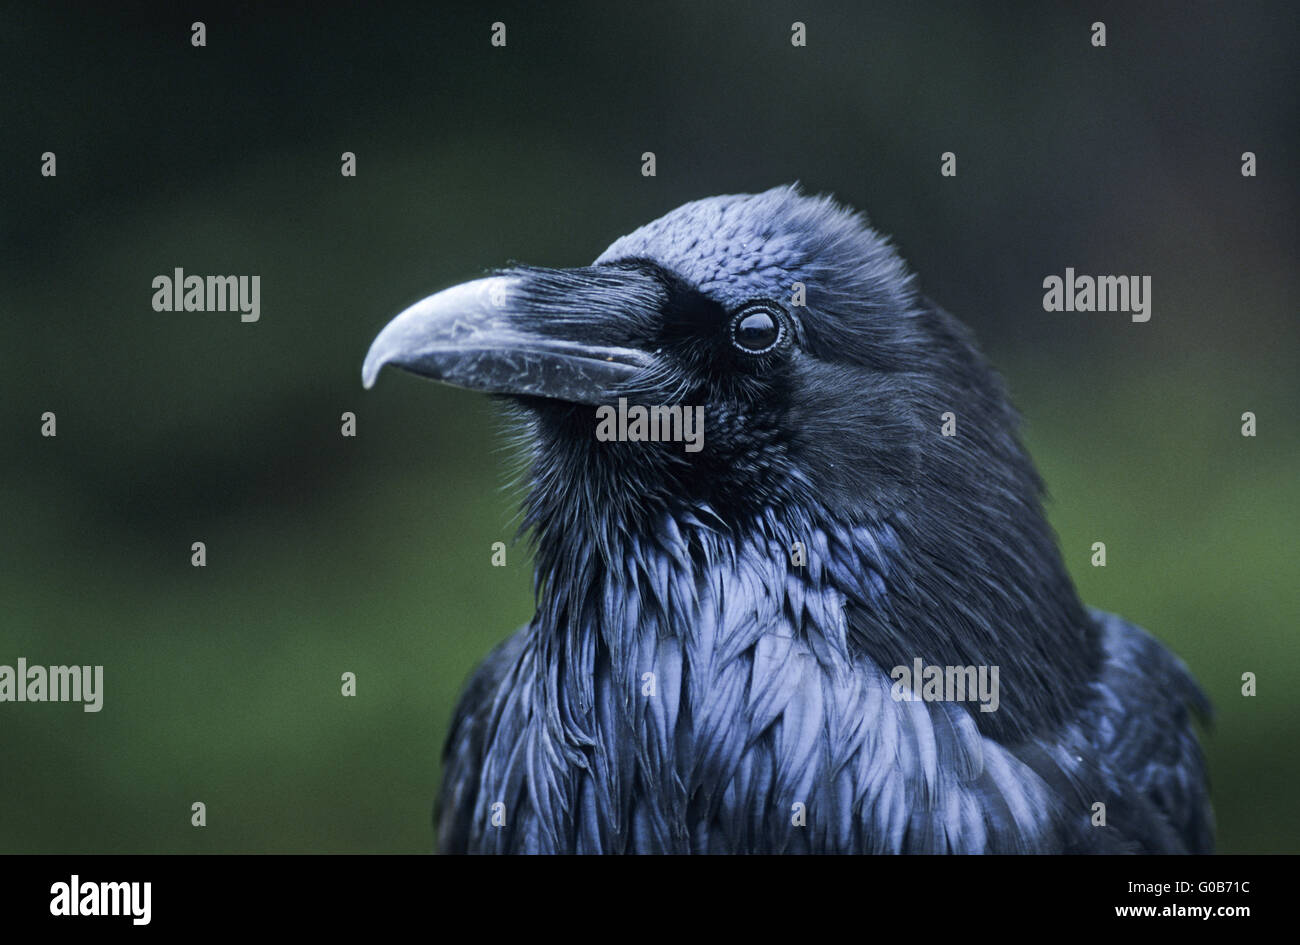 Common Raven portrait of an adult bird Stock Photo